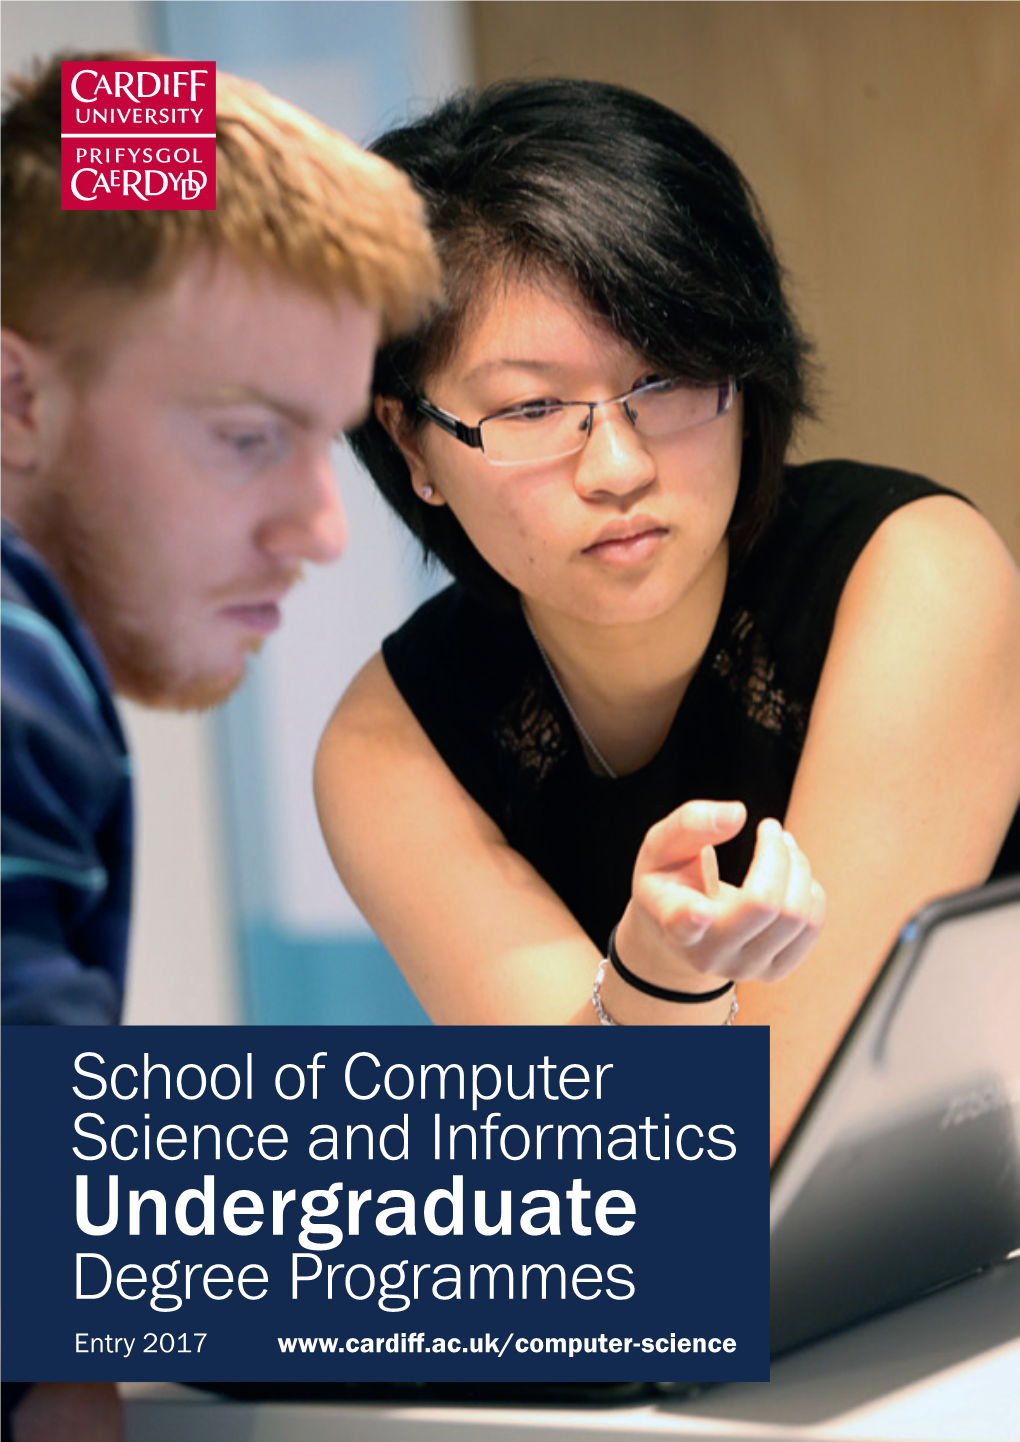 Undergraduate Degree Programmes Entry 2017 Cardiff University School of Computer Science and Informatics